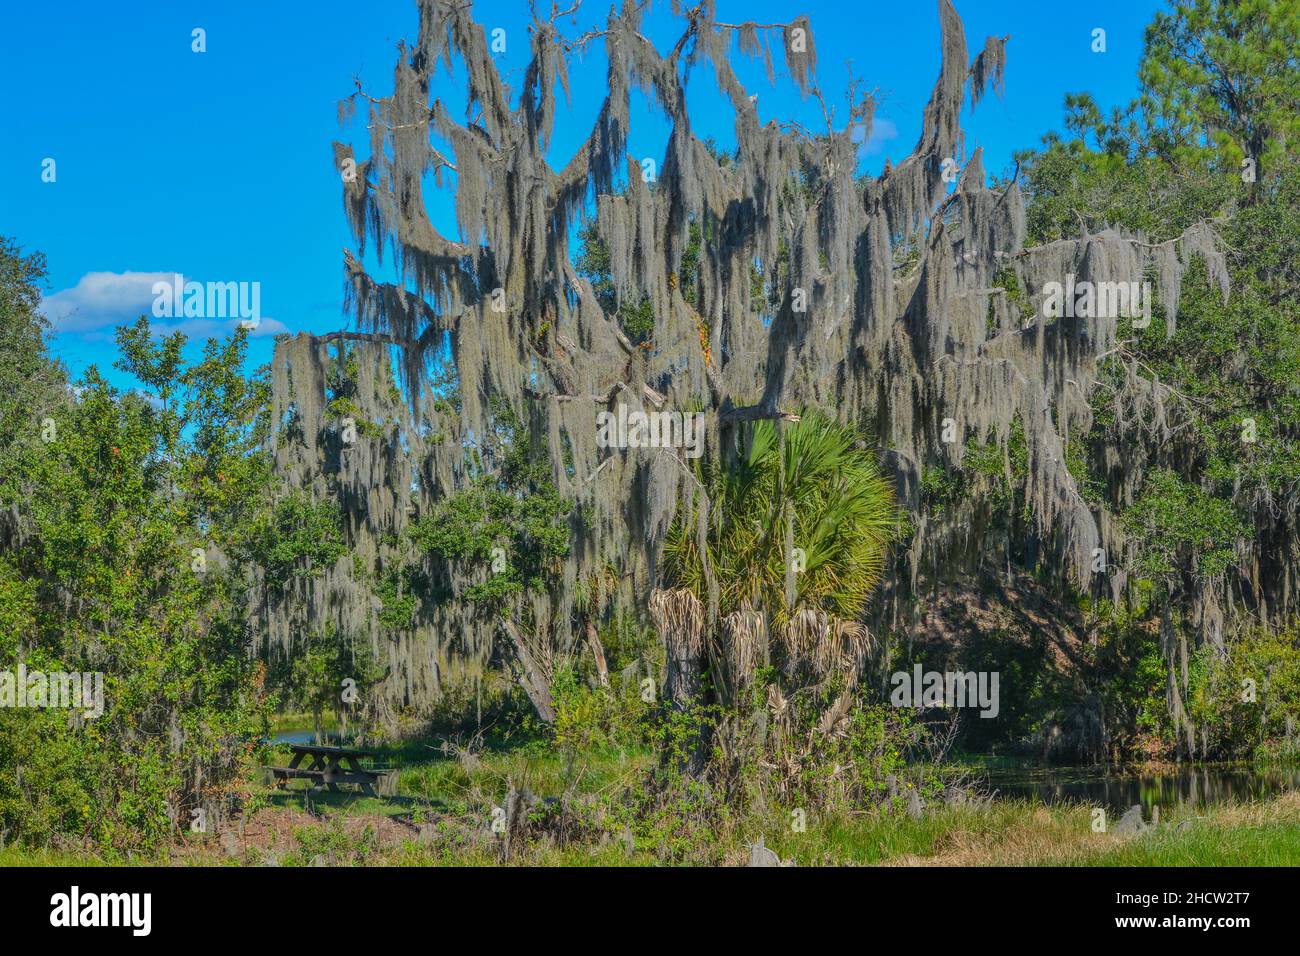 The beautiful tree lined Hurrah Lake in Alafia River State Park, Lithia, Hillsborough County, Florida Stock Photo